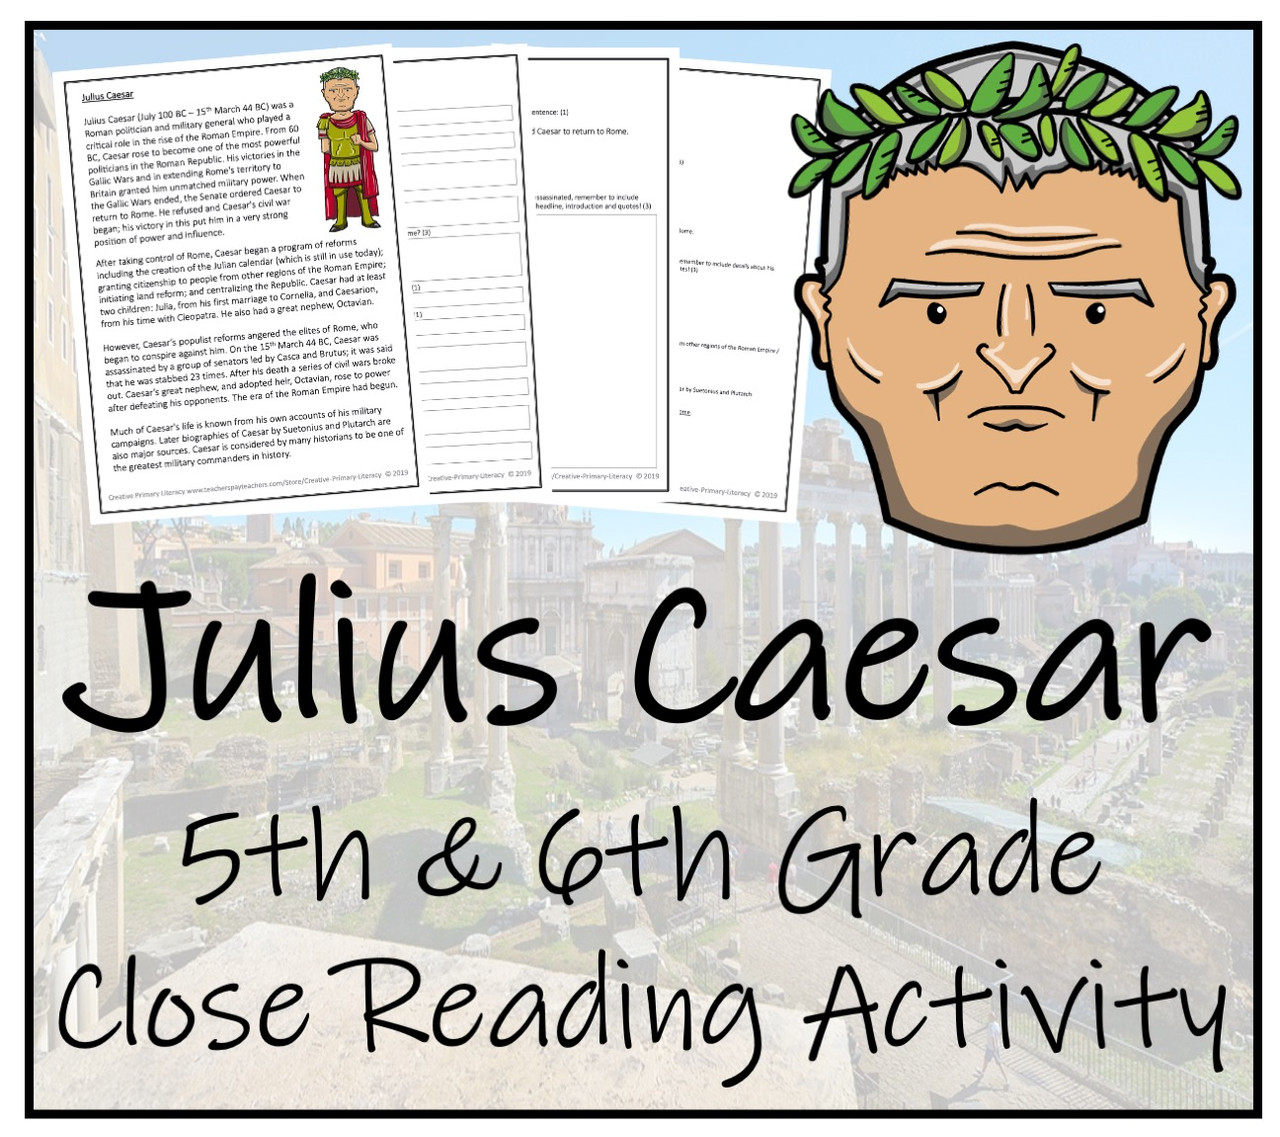 Julius Caesar Close Reading Activity | 5th Grade & 6th Grade